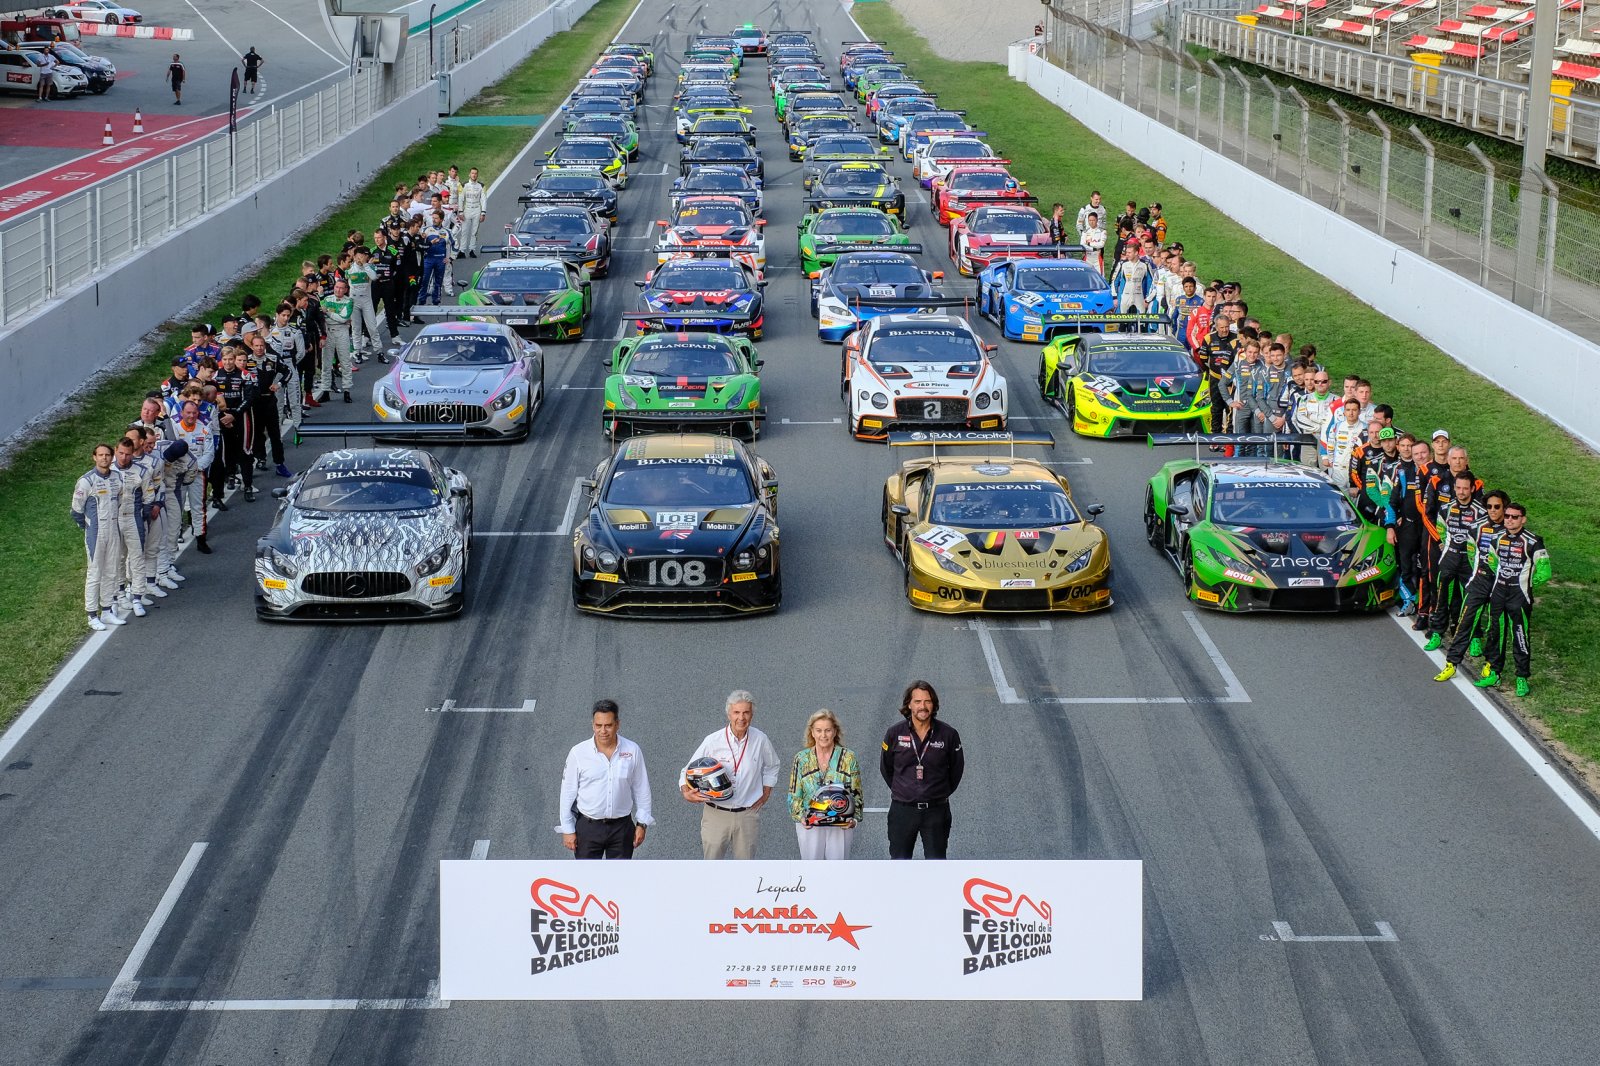 Full turnout of Blancpain GT Series drivers to promote Legado Maria de Villota